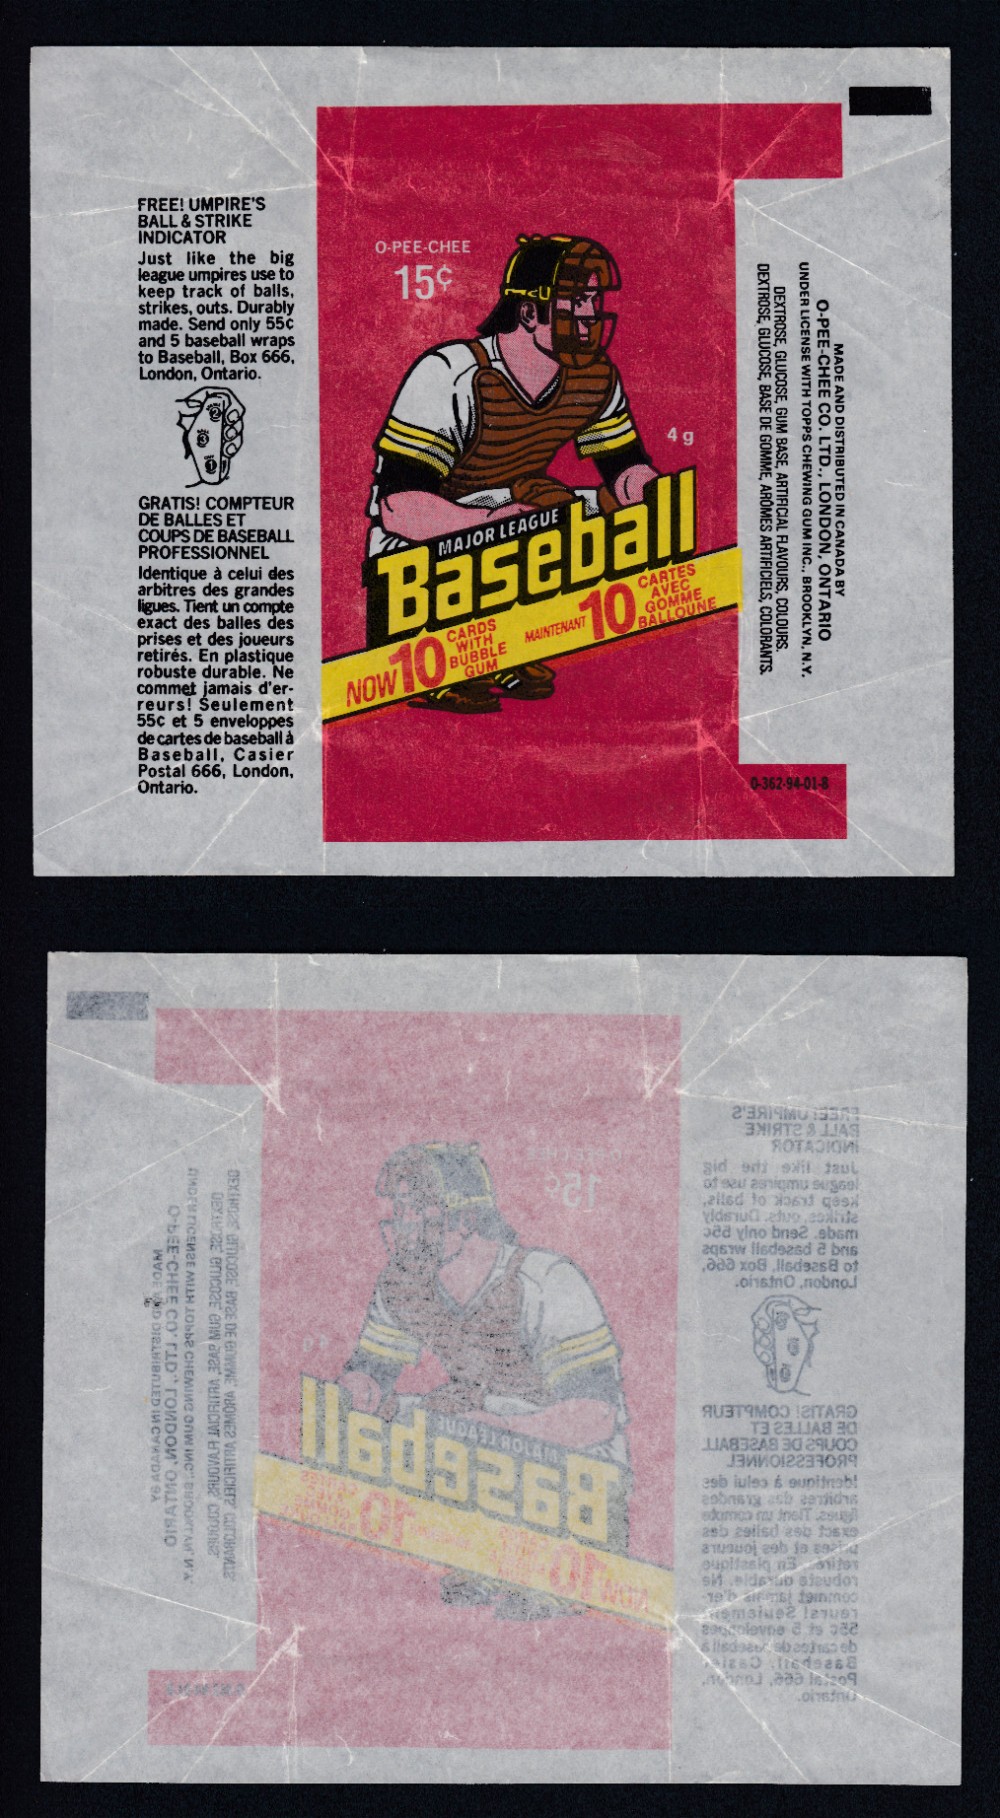 1978 O-PEE-CHEE BASEBALL CARD WRAPPER photo